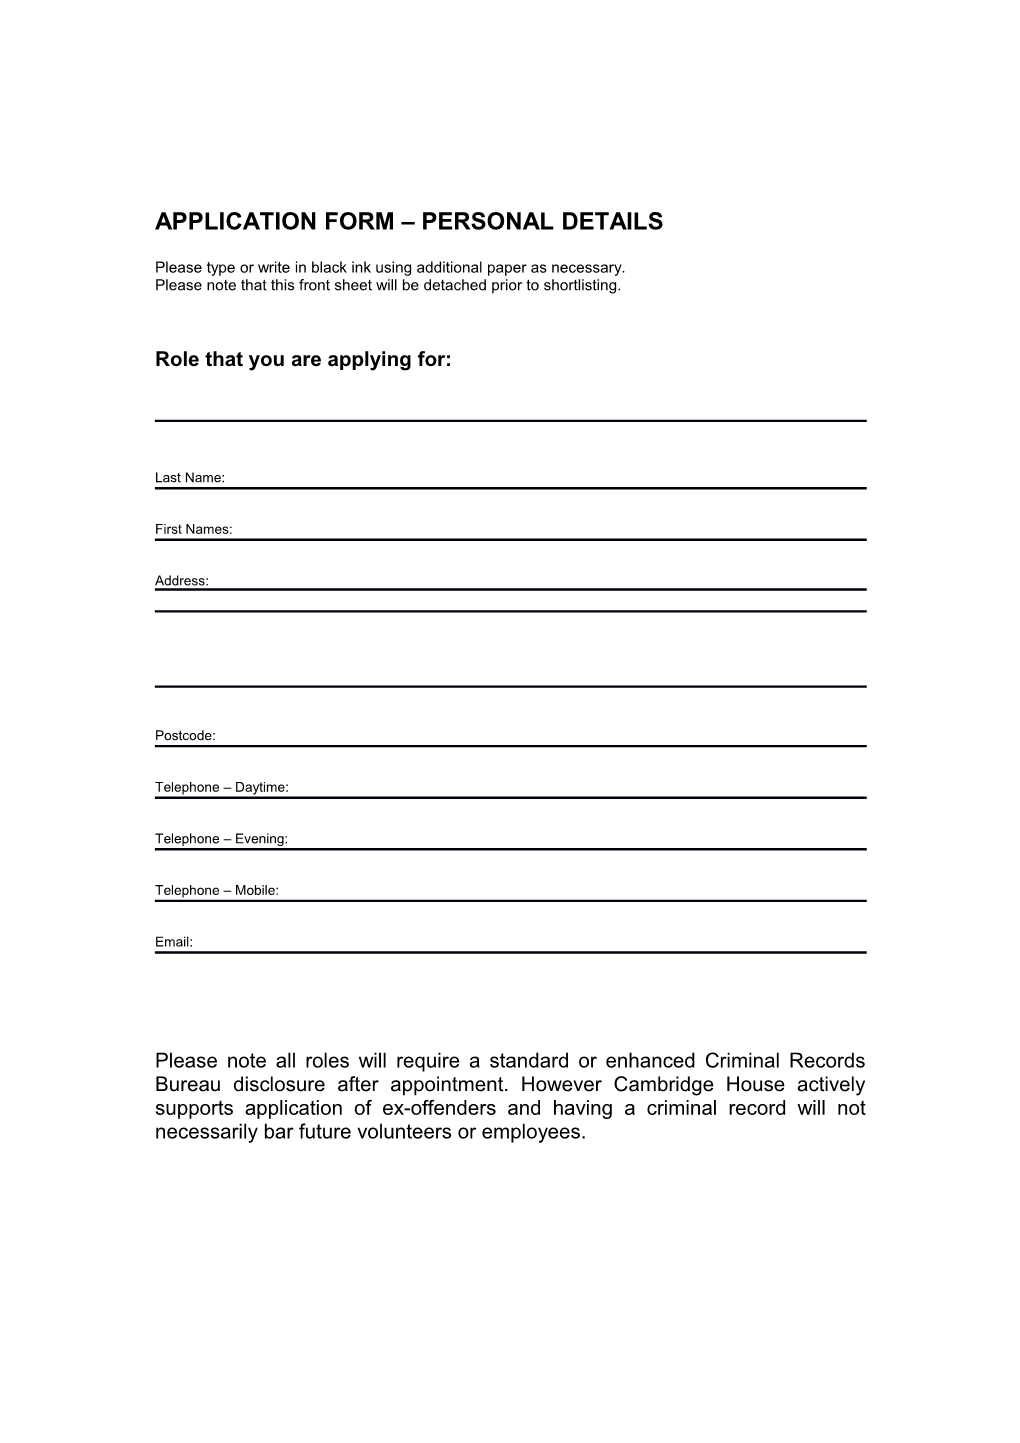 Application Form Personal Details